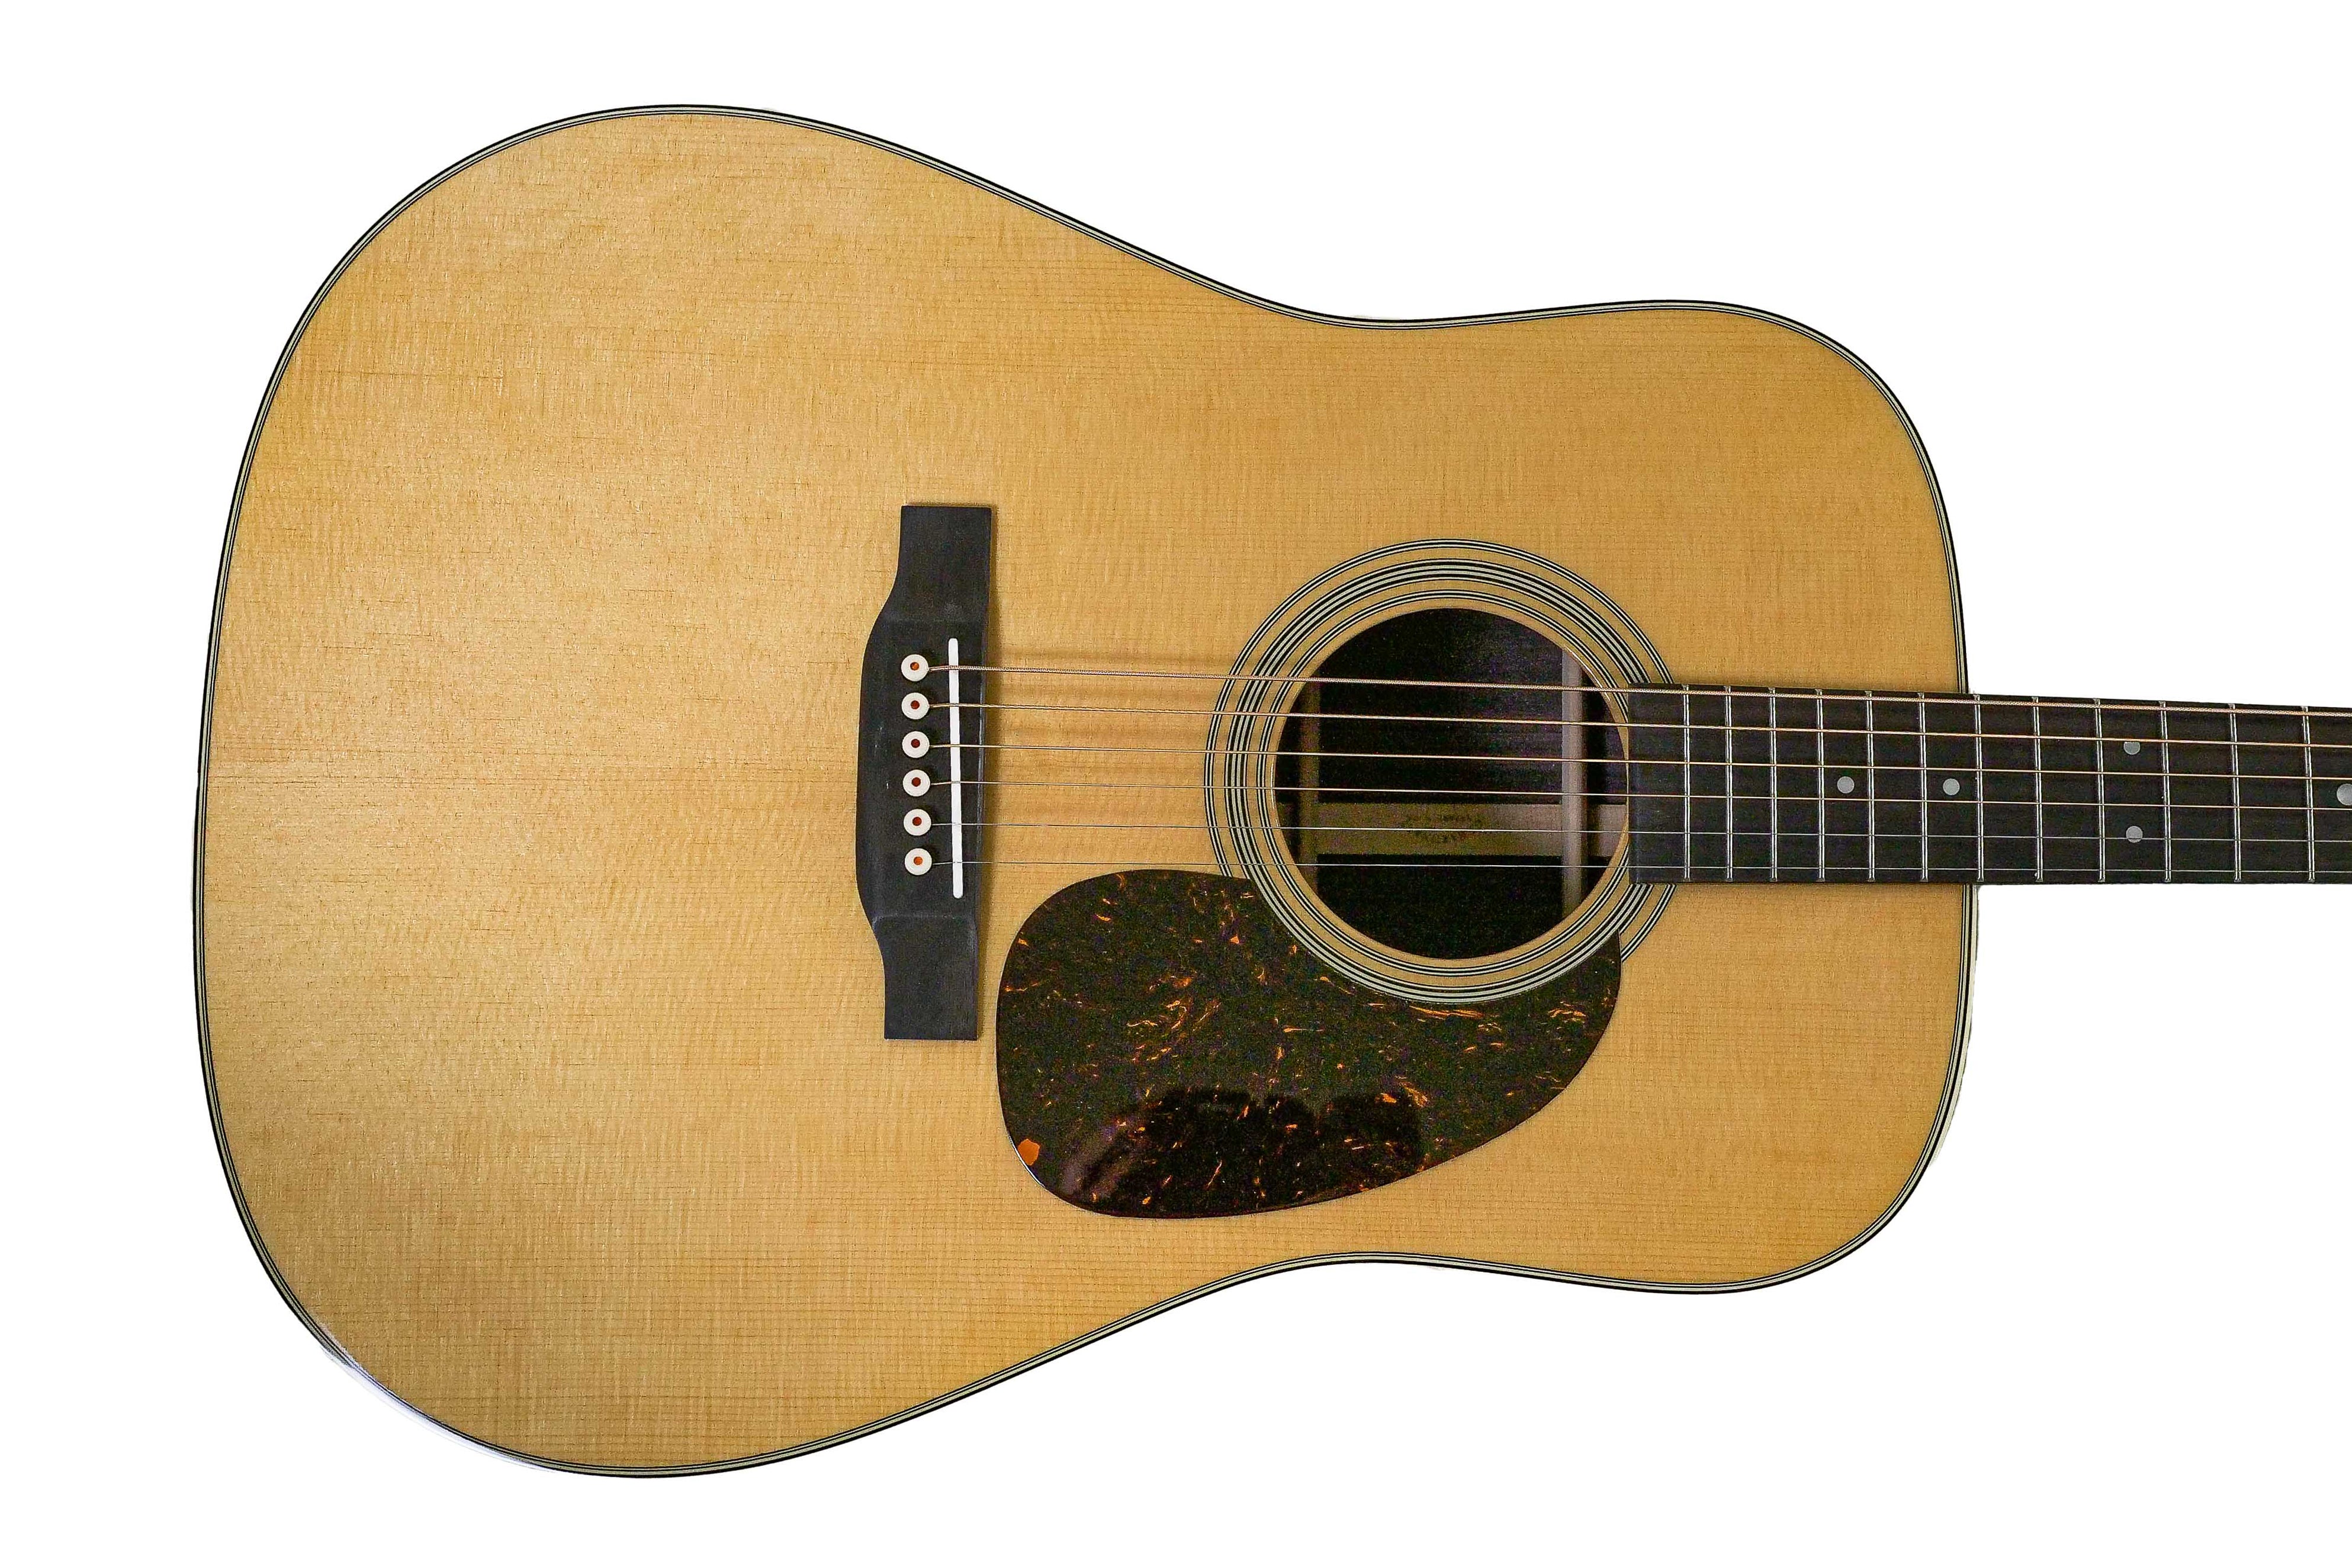 Martin D-28 Acoustic Guitar "Amelia"